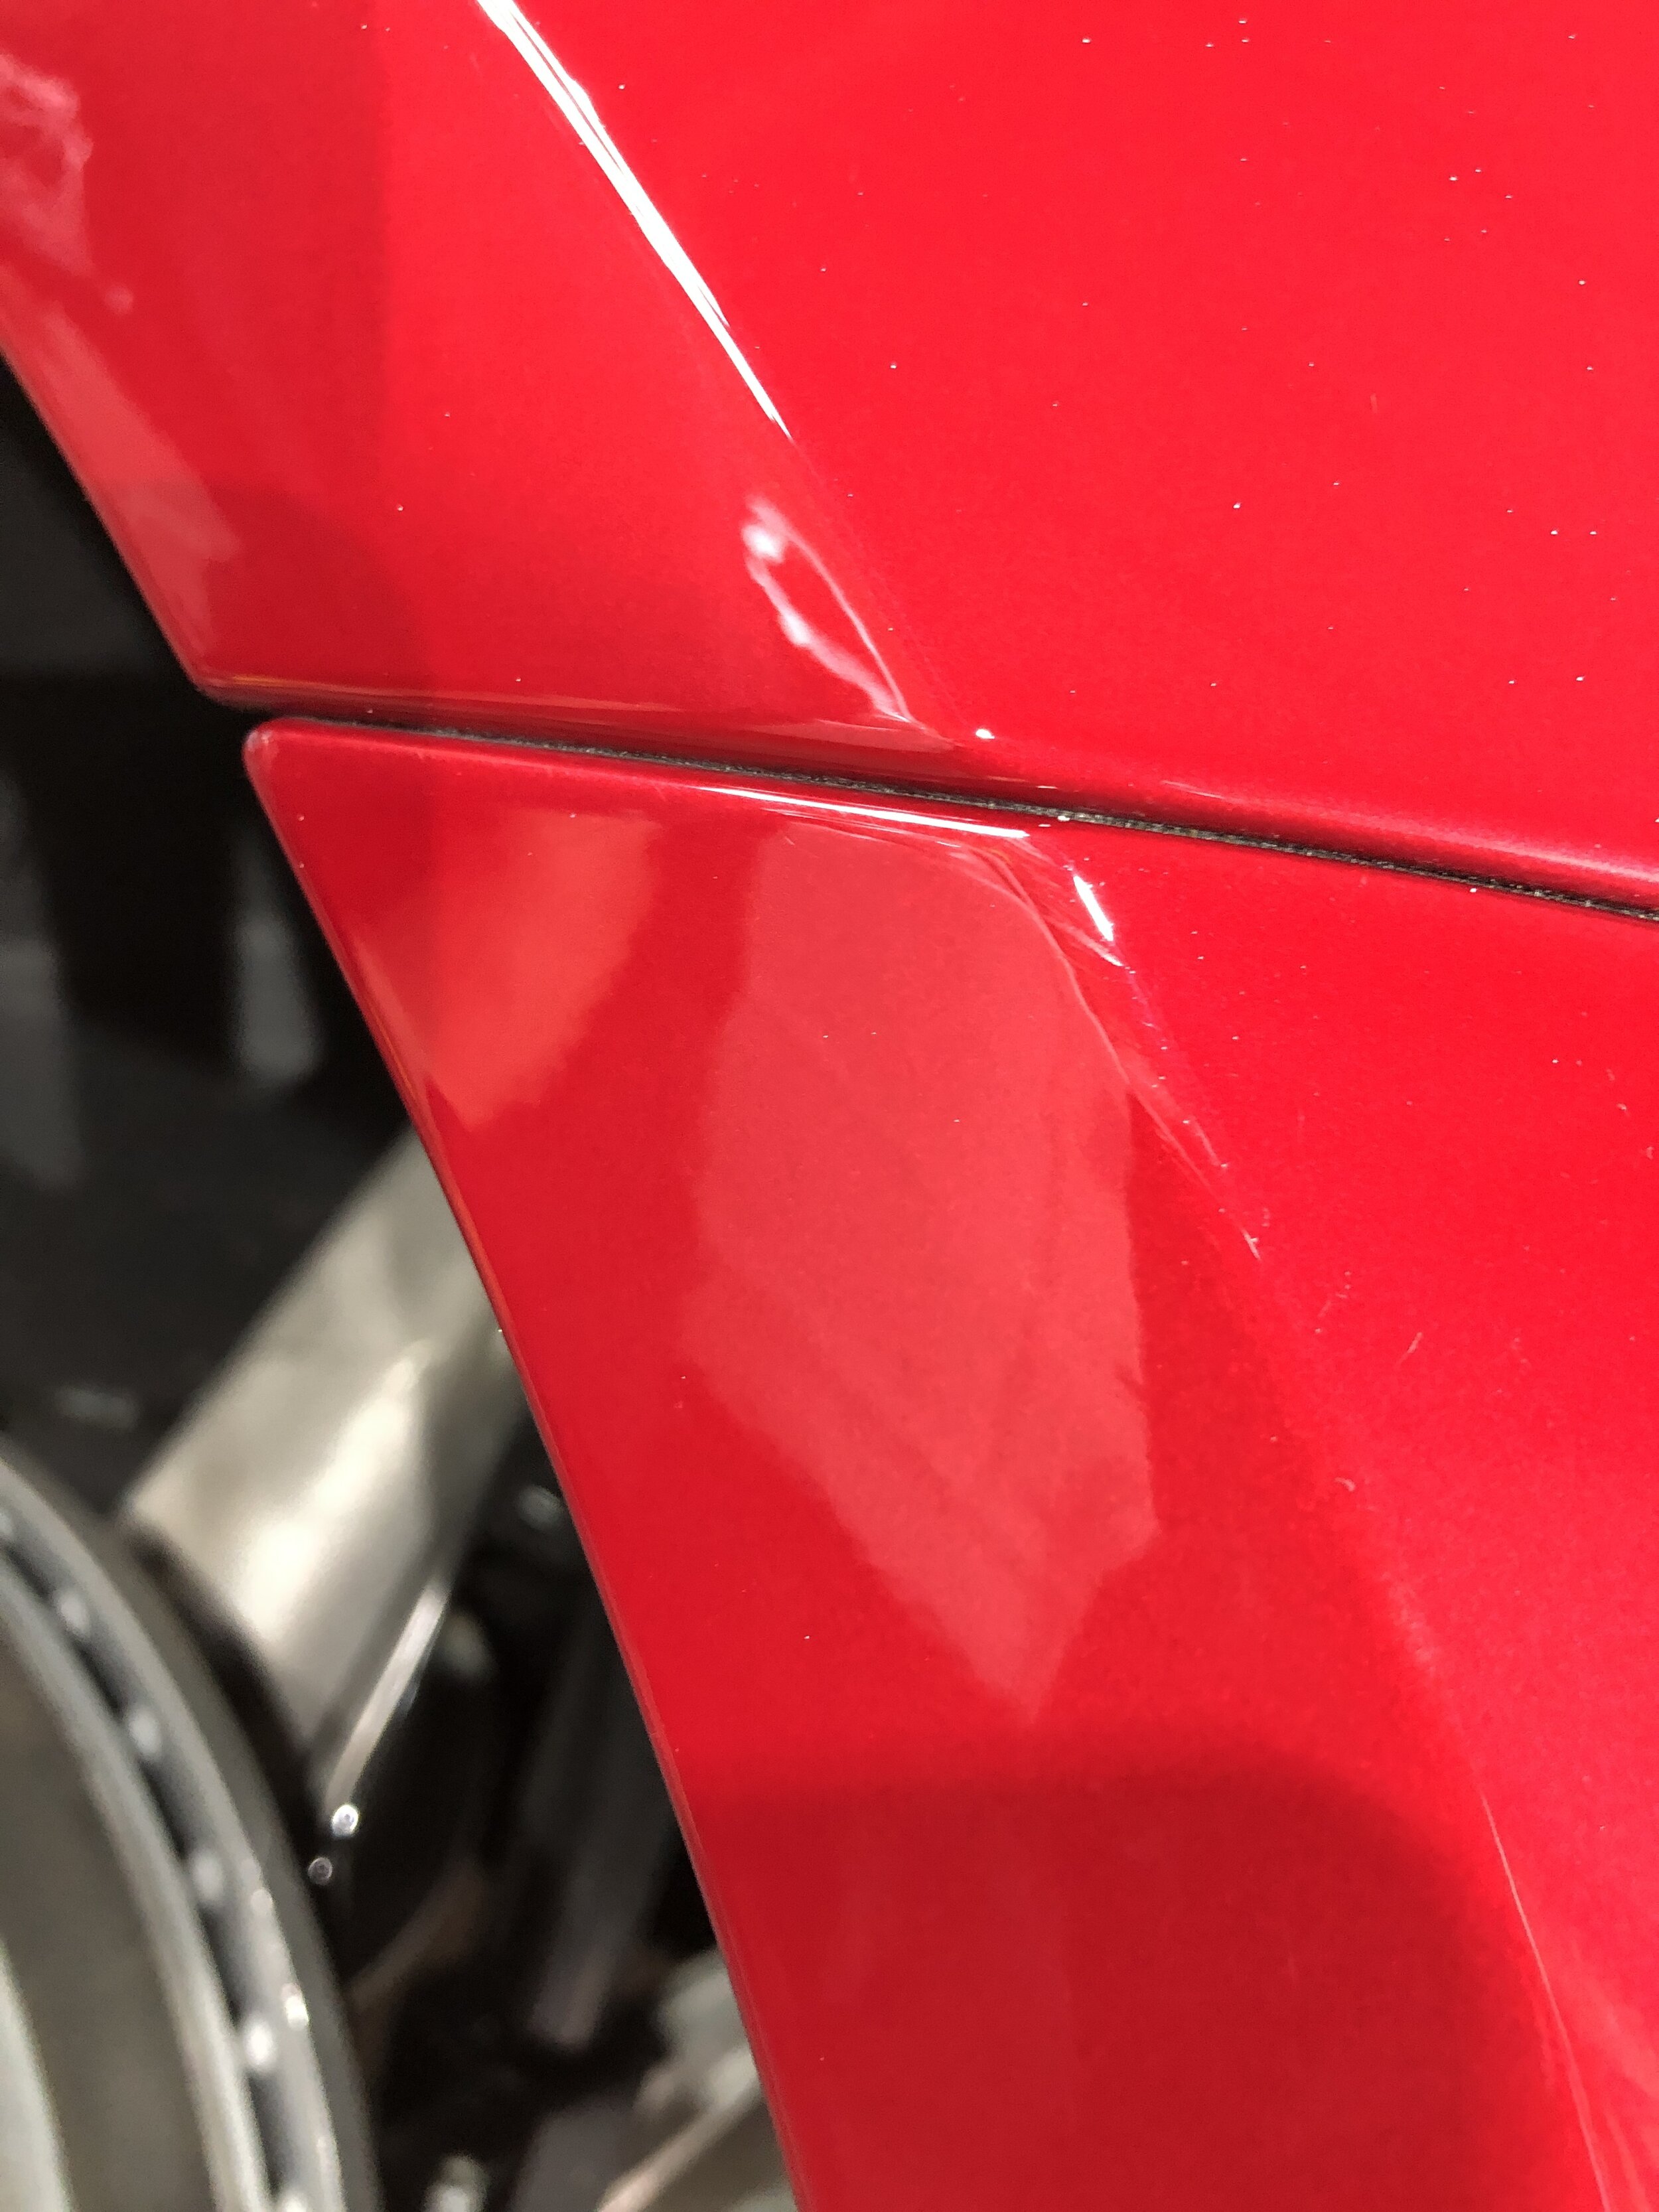 2020 Tesla Model 3 (Multicoat Red) — DETAILERSHIP™